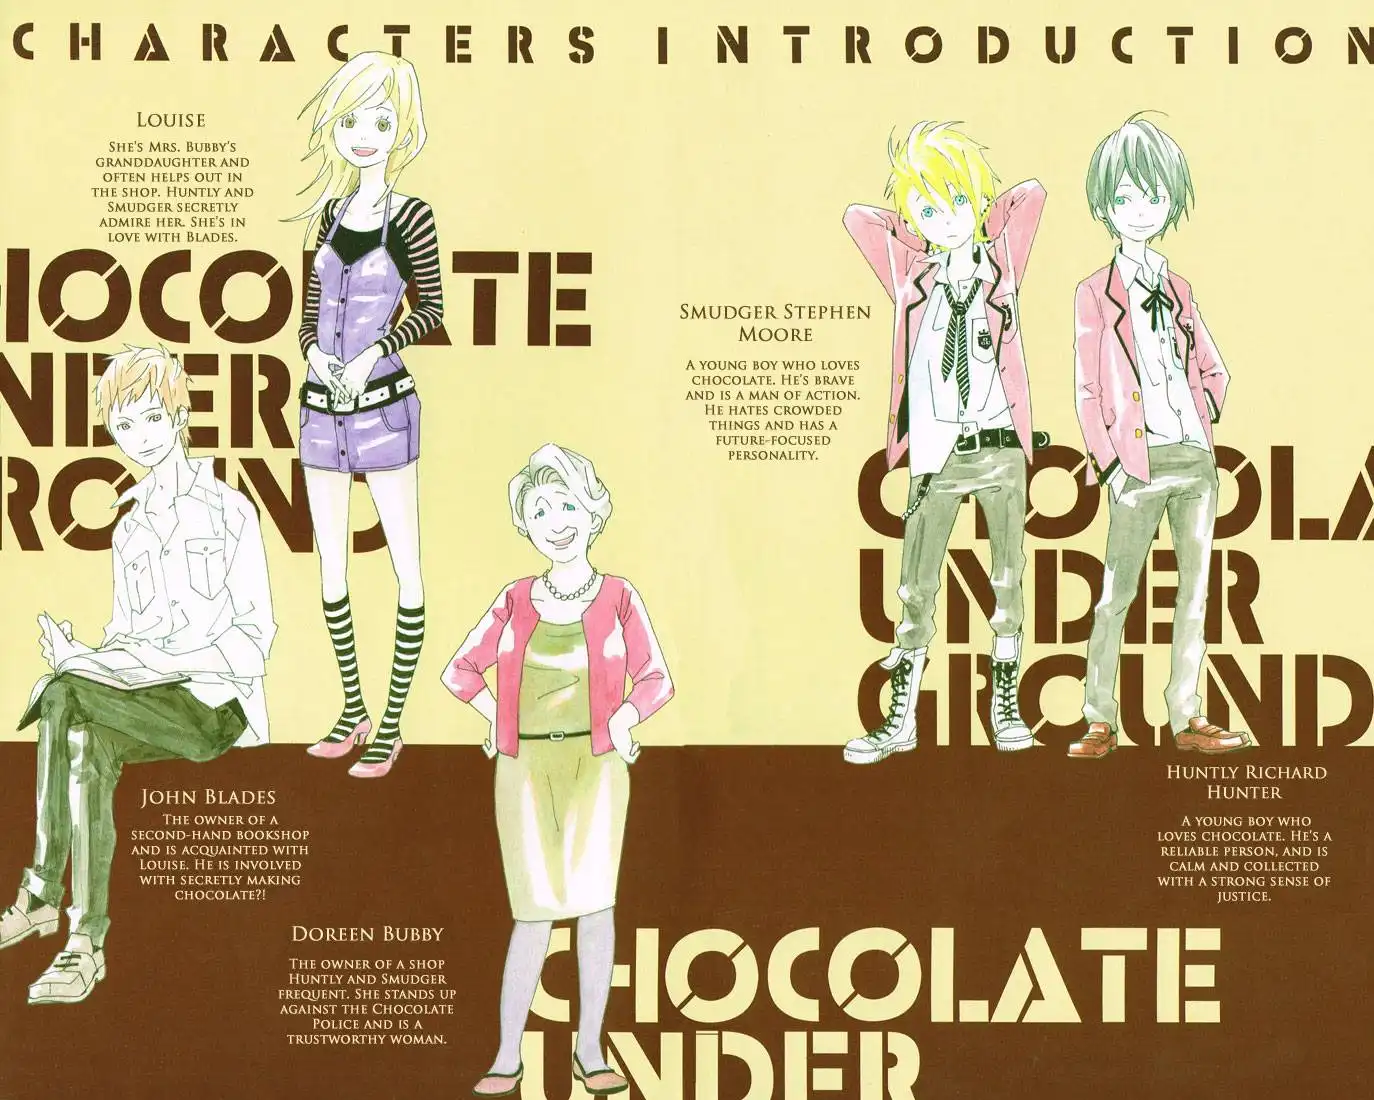 Chocolate Underground Chapter 1